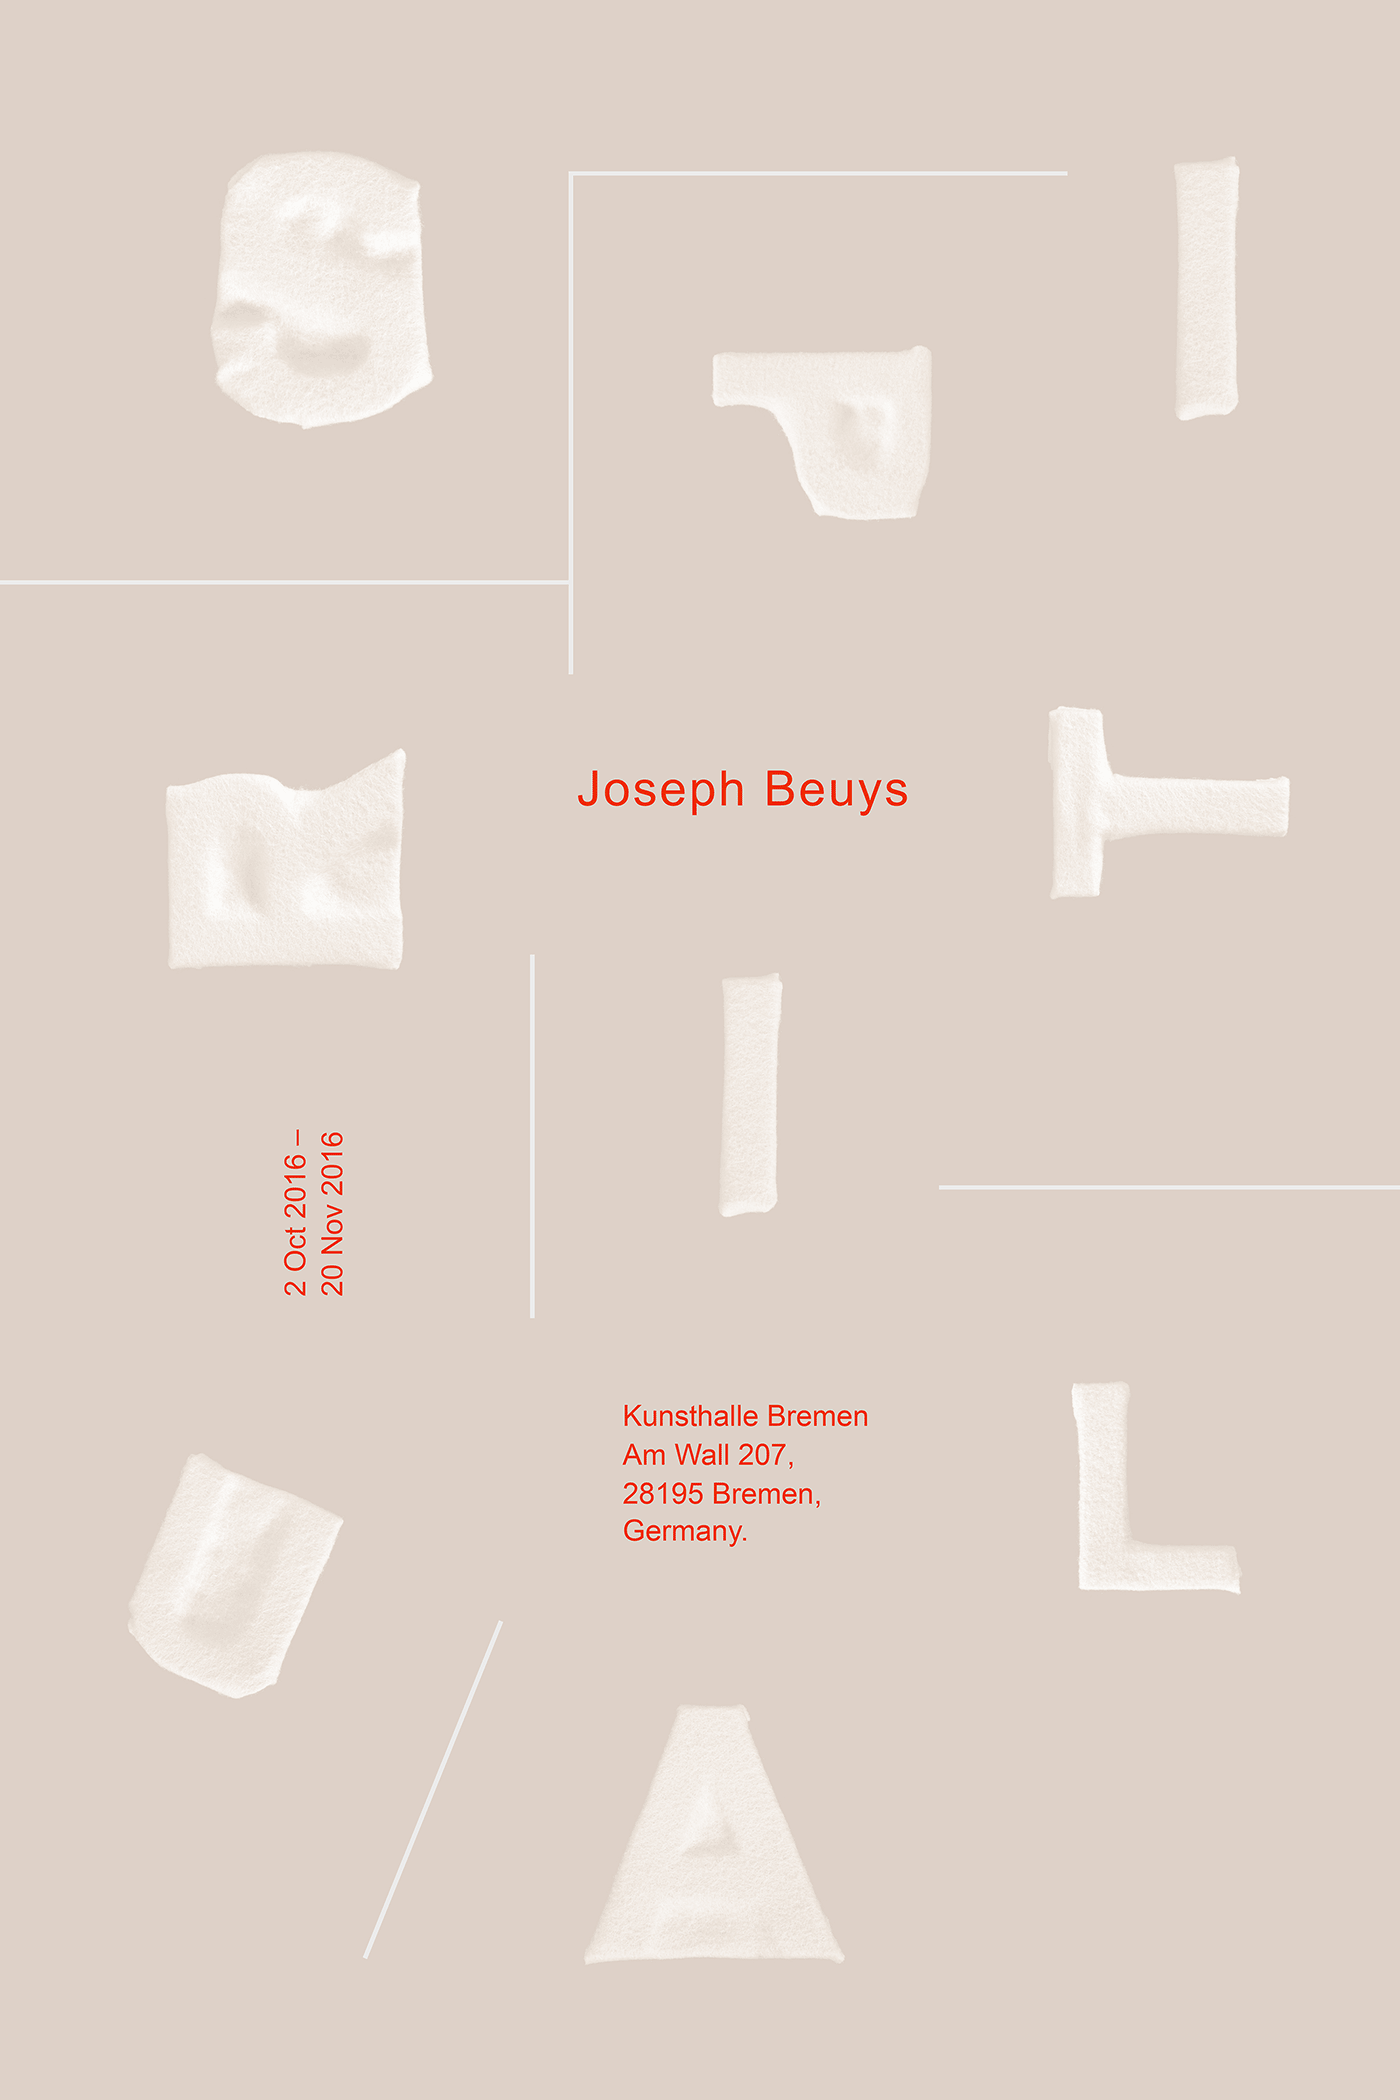 poster type Fluxus beuys Joseph Exhibition  adobeawards